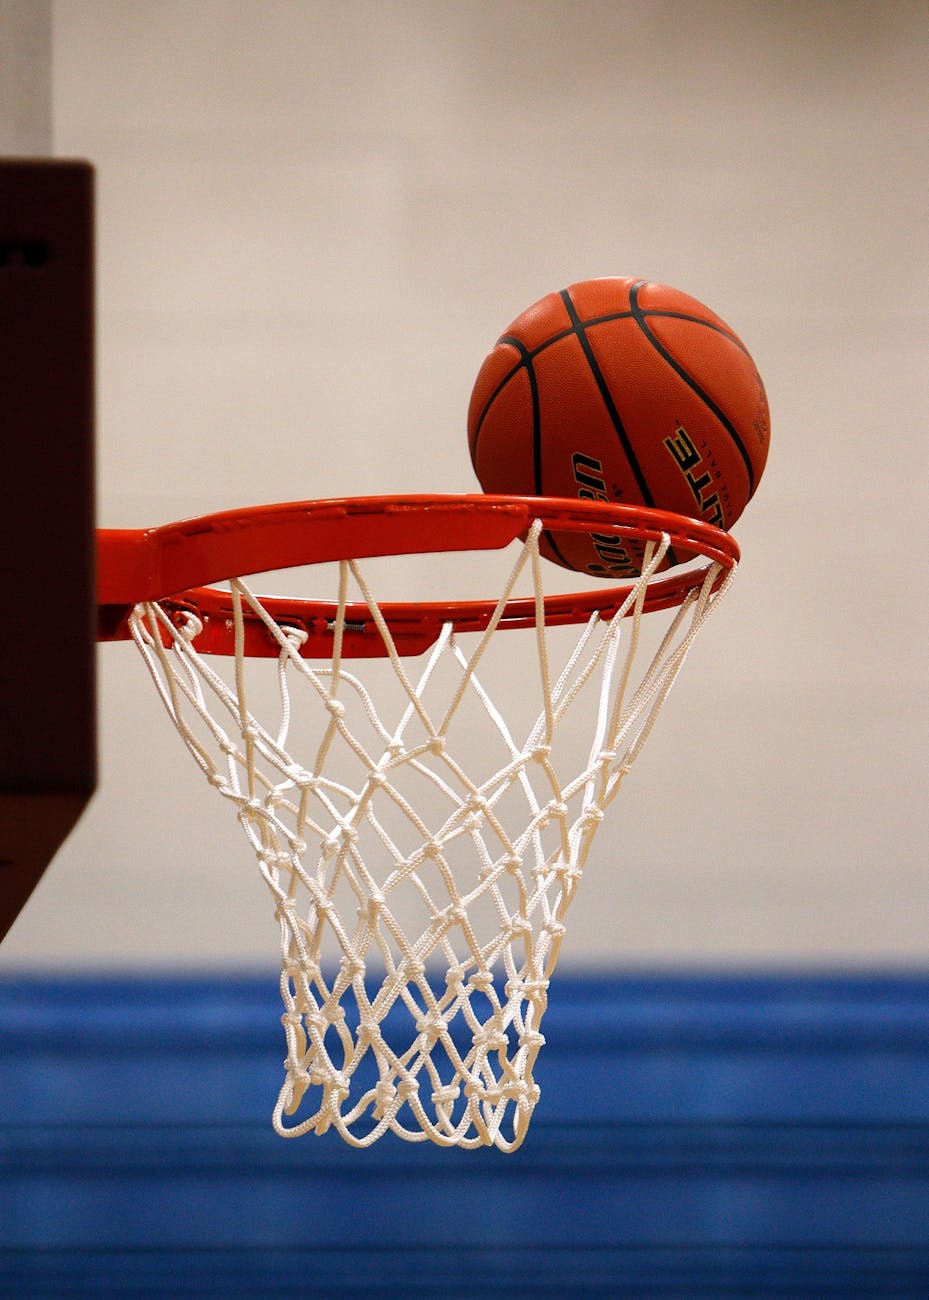 Bridging the Gap: Exploring the WNBA and NBA